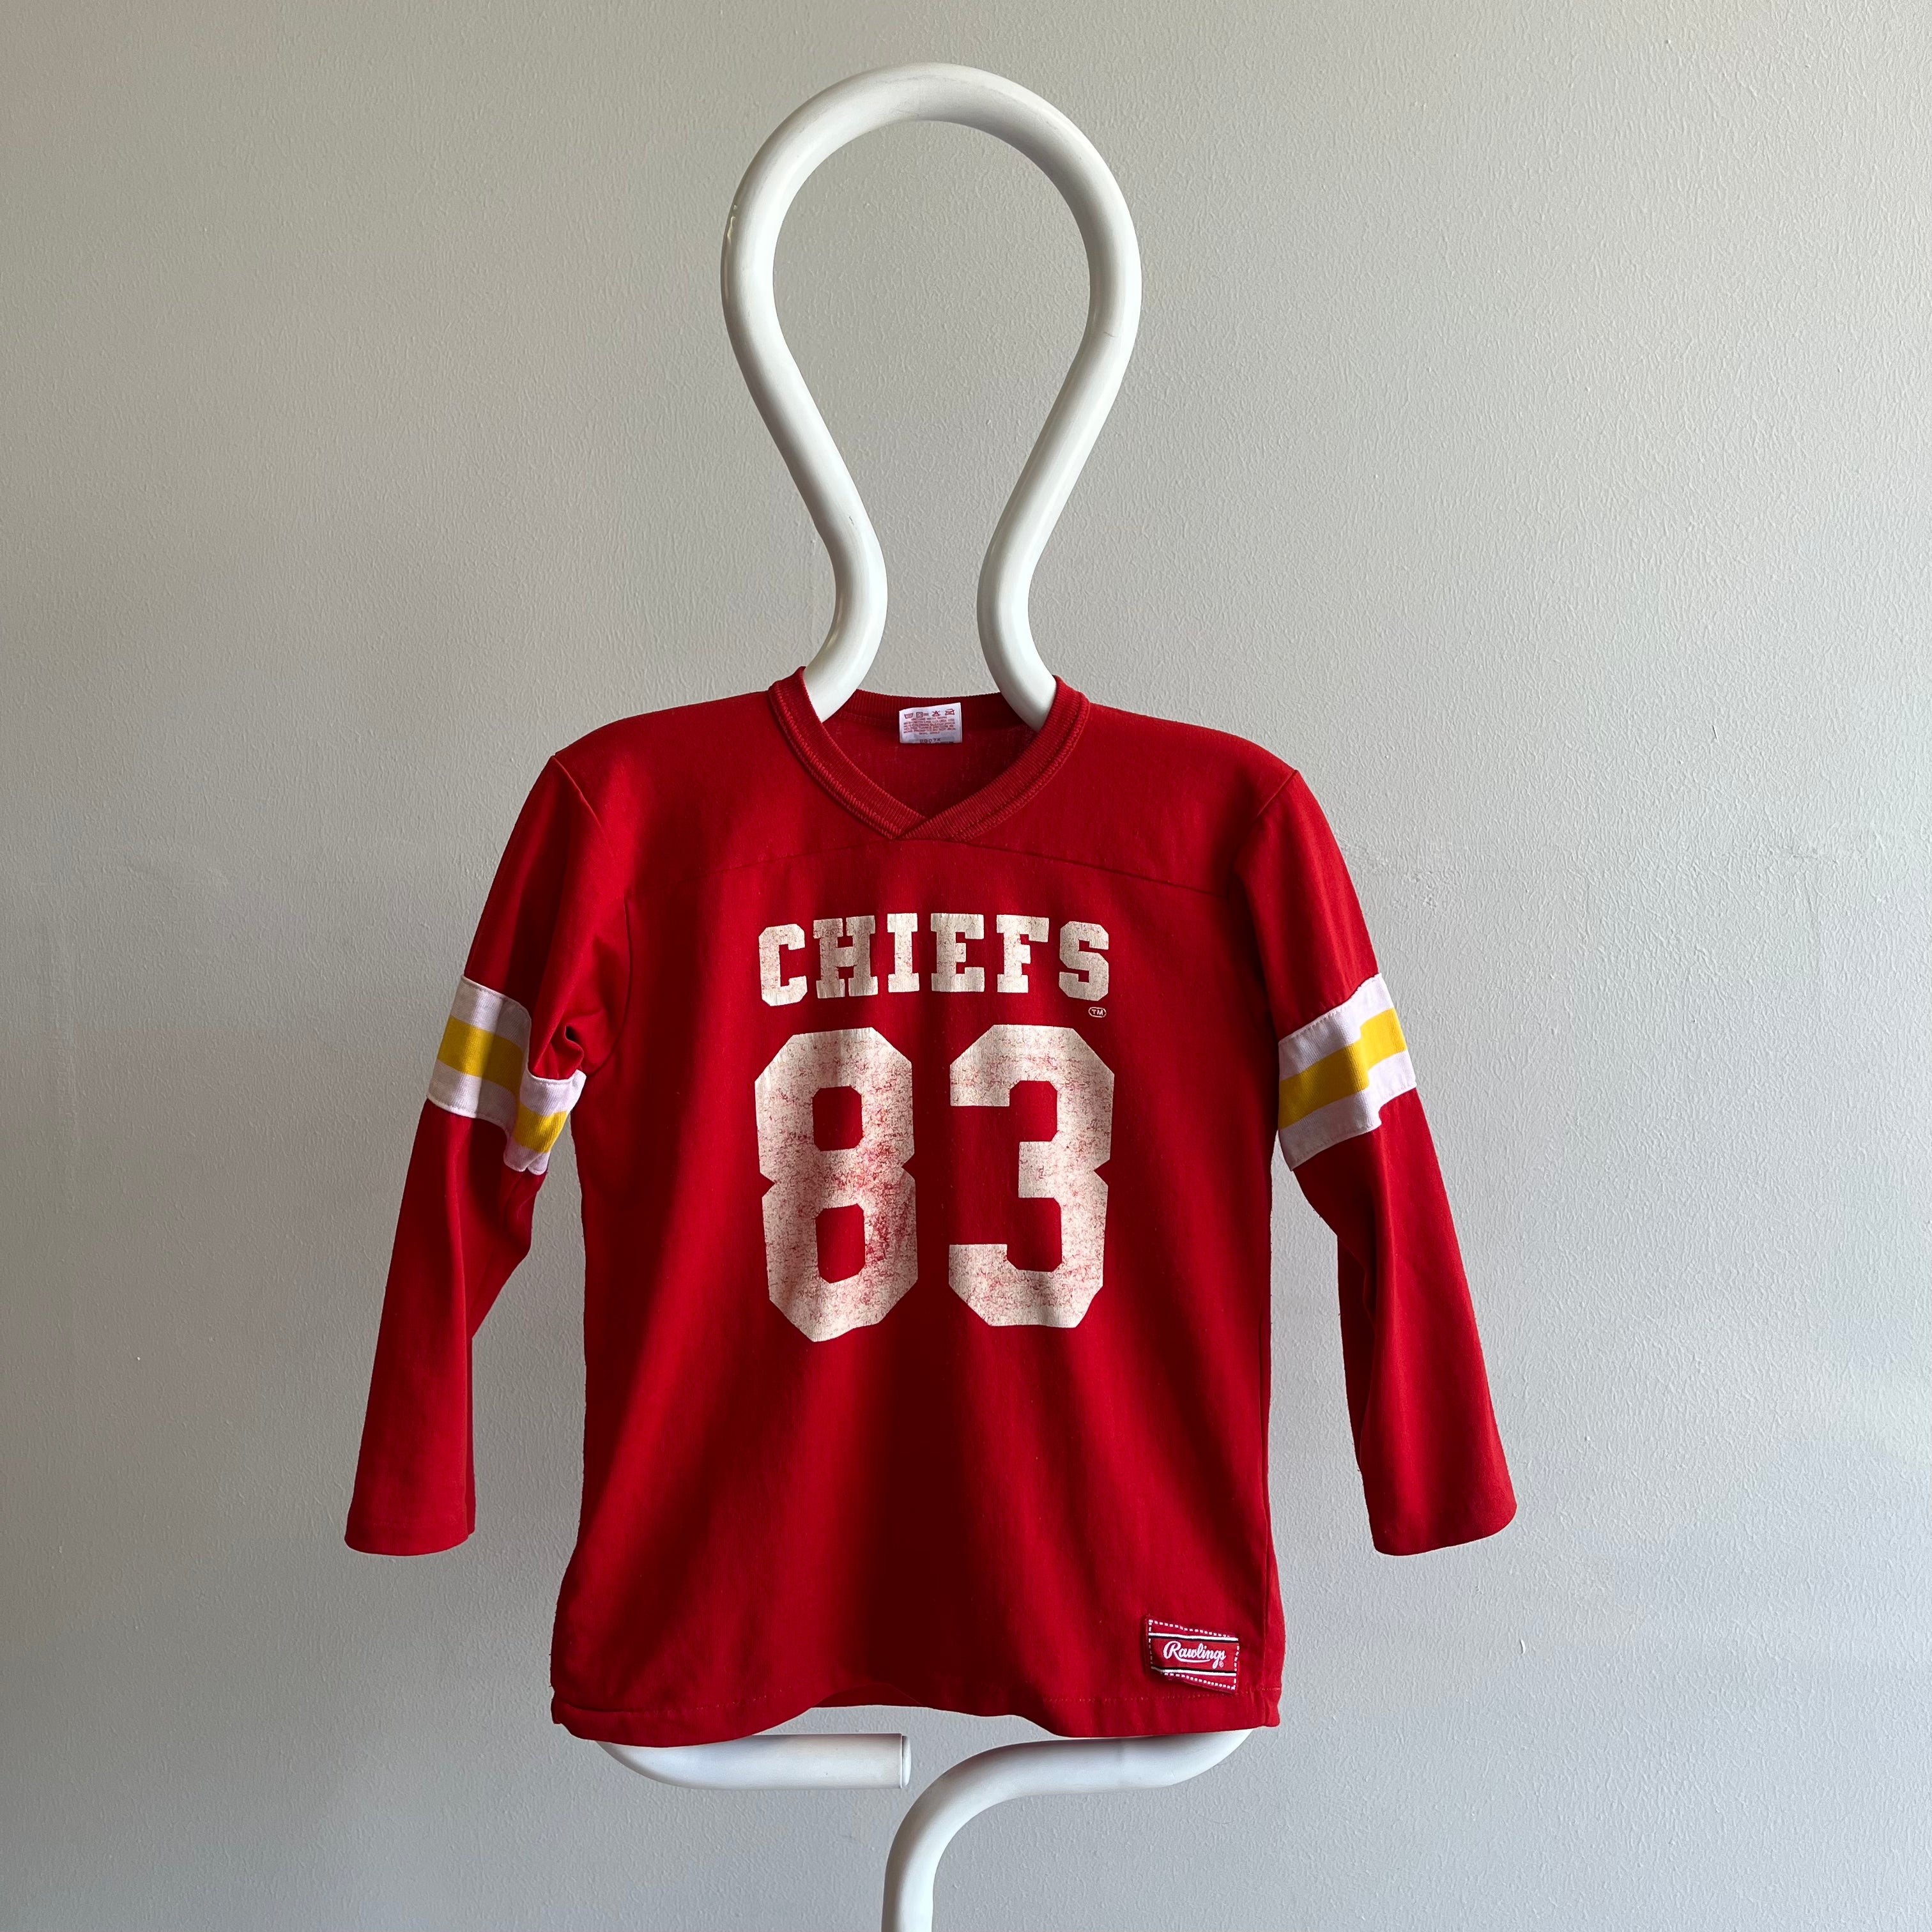 1983 Kansas CIty Chiefs XS Football Jersey - WOW